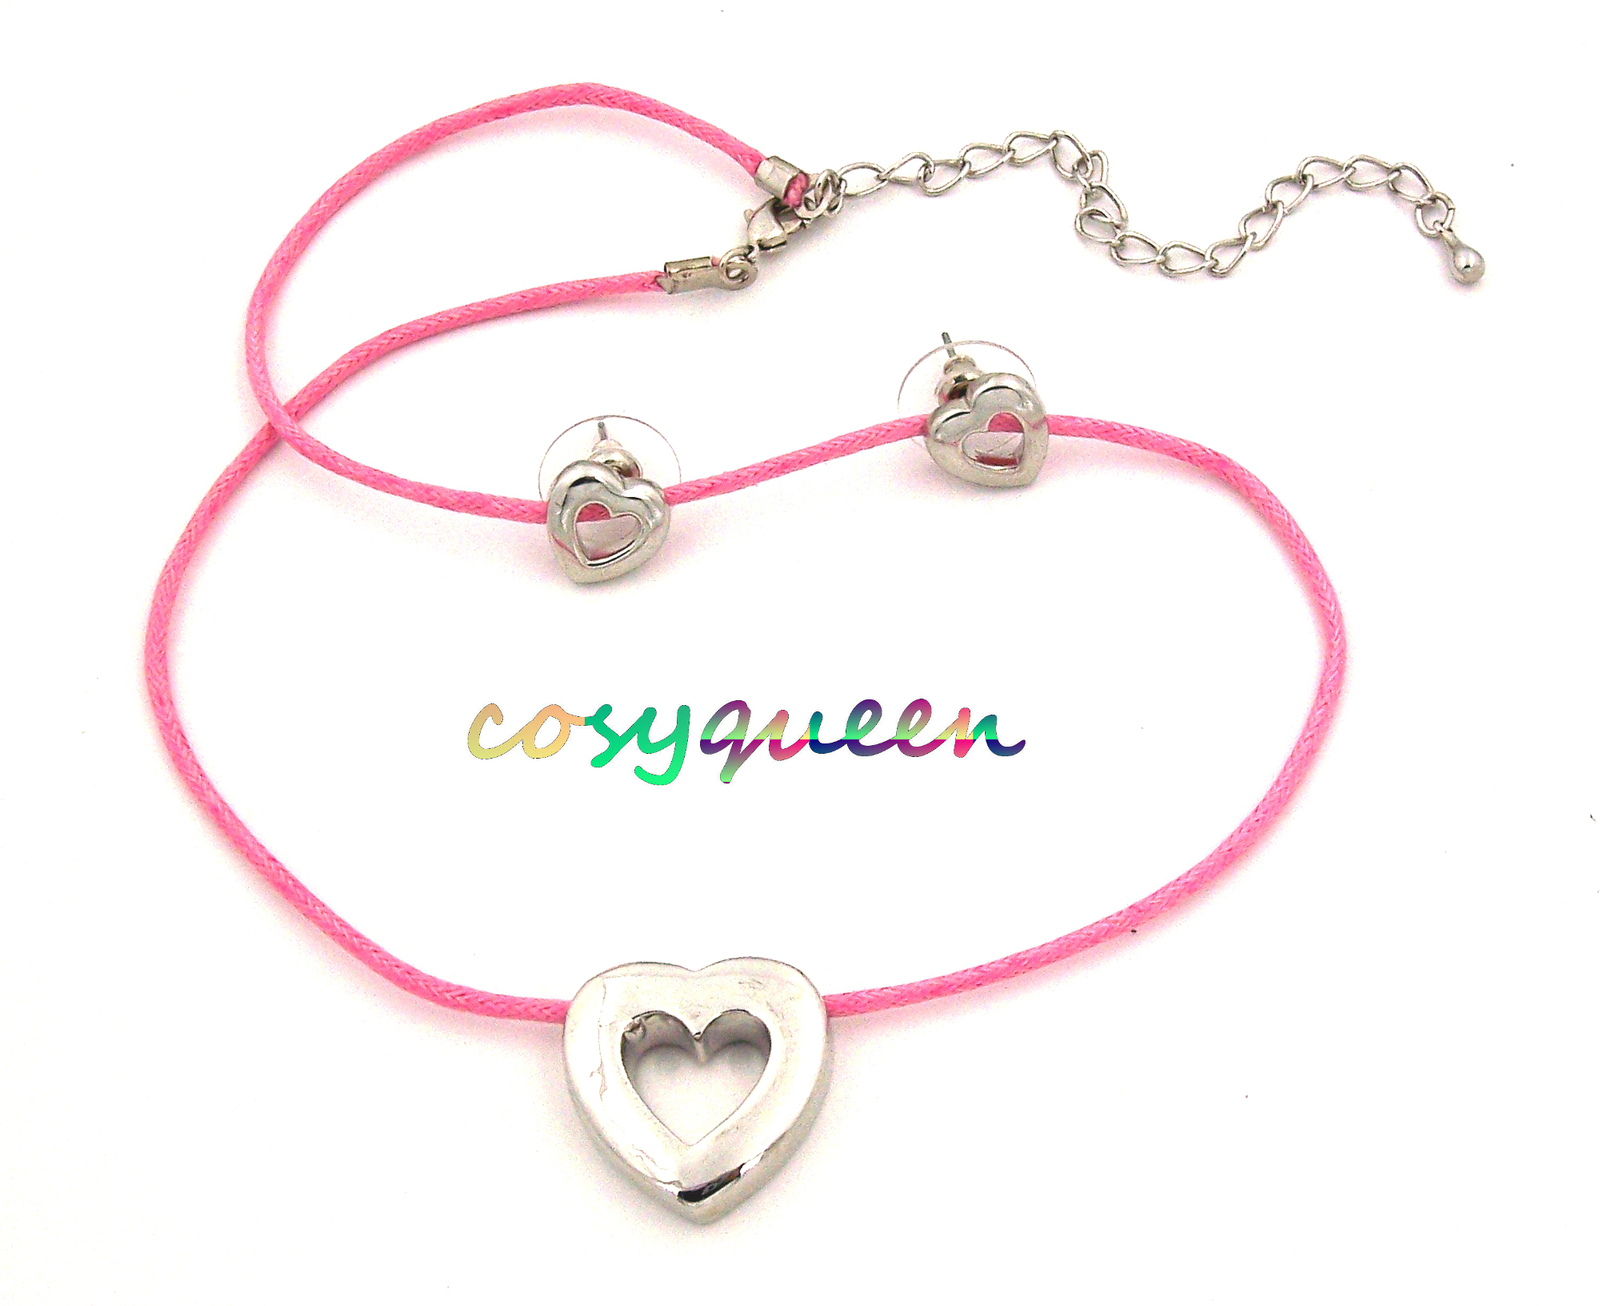 Fabulous hot pink silver love heart pendant necklace & earring gift set - $9,999.00